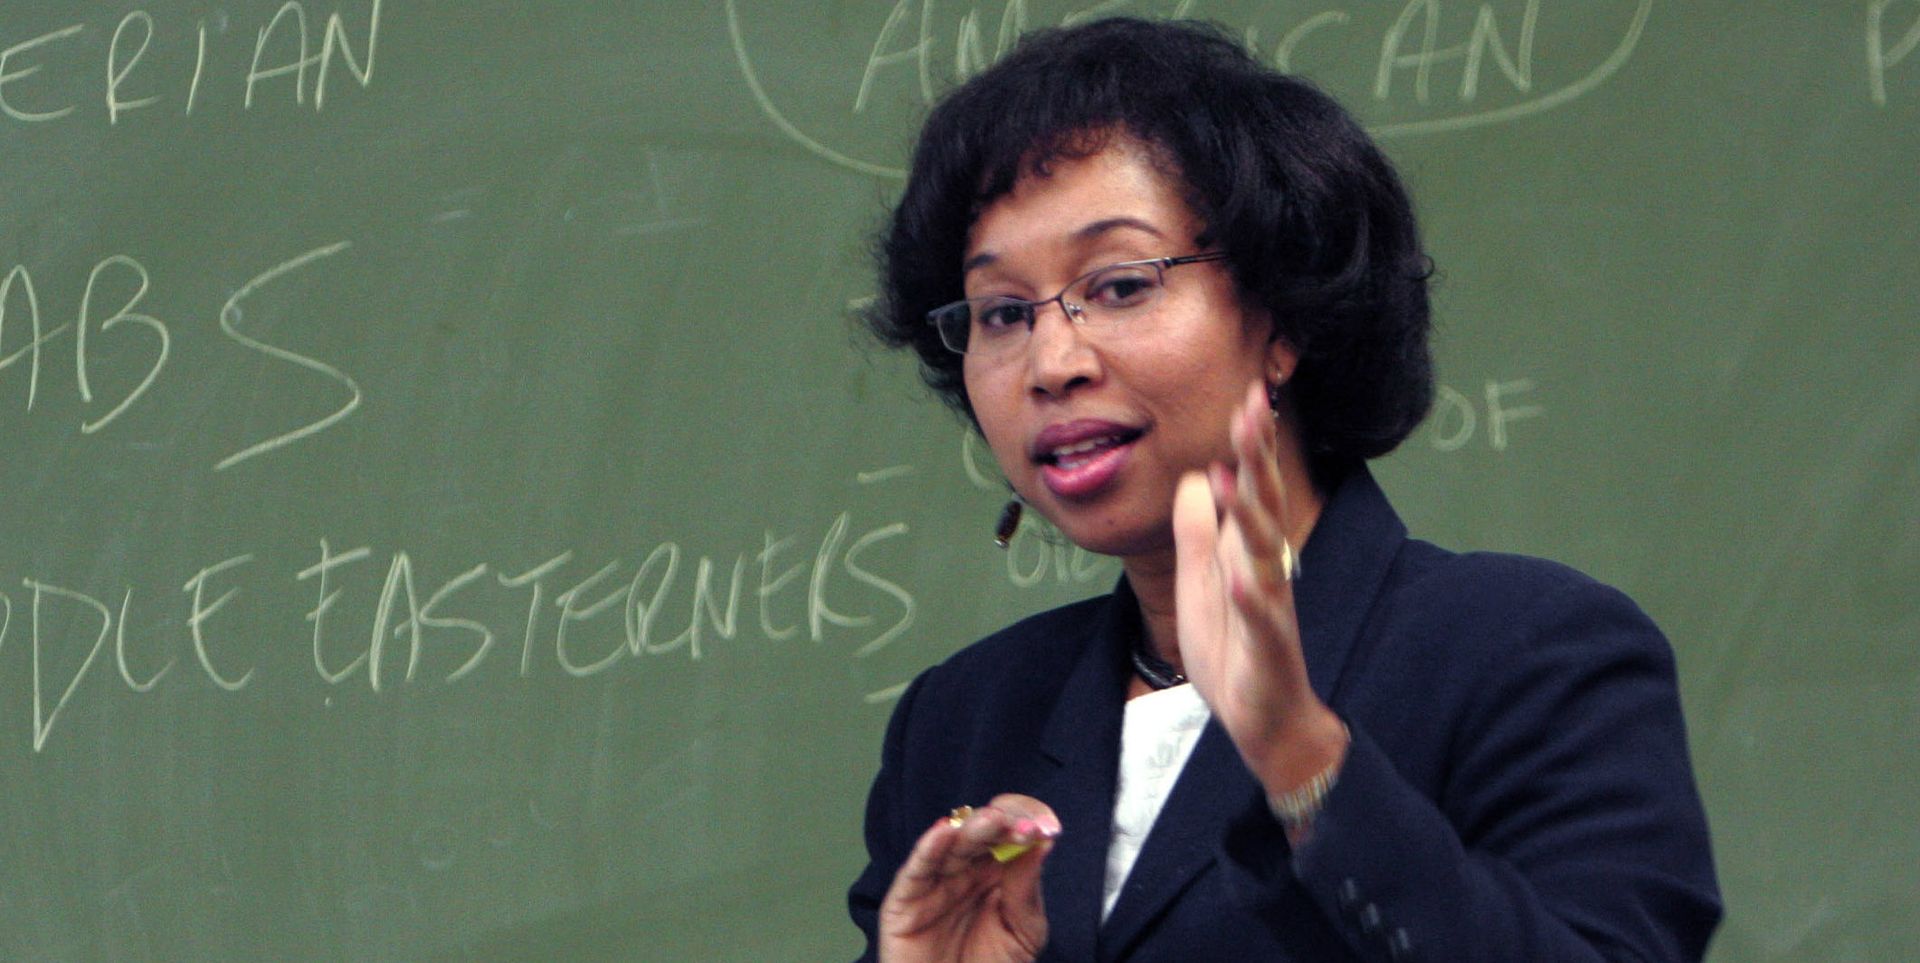  photo black-woman-professor.jpg